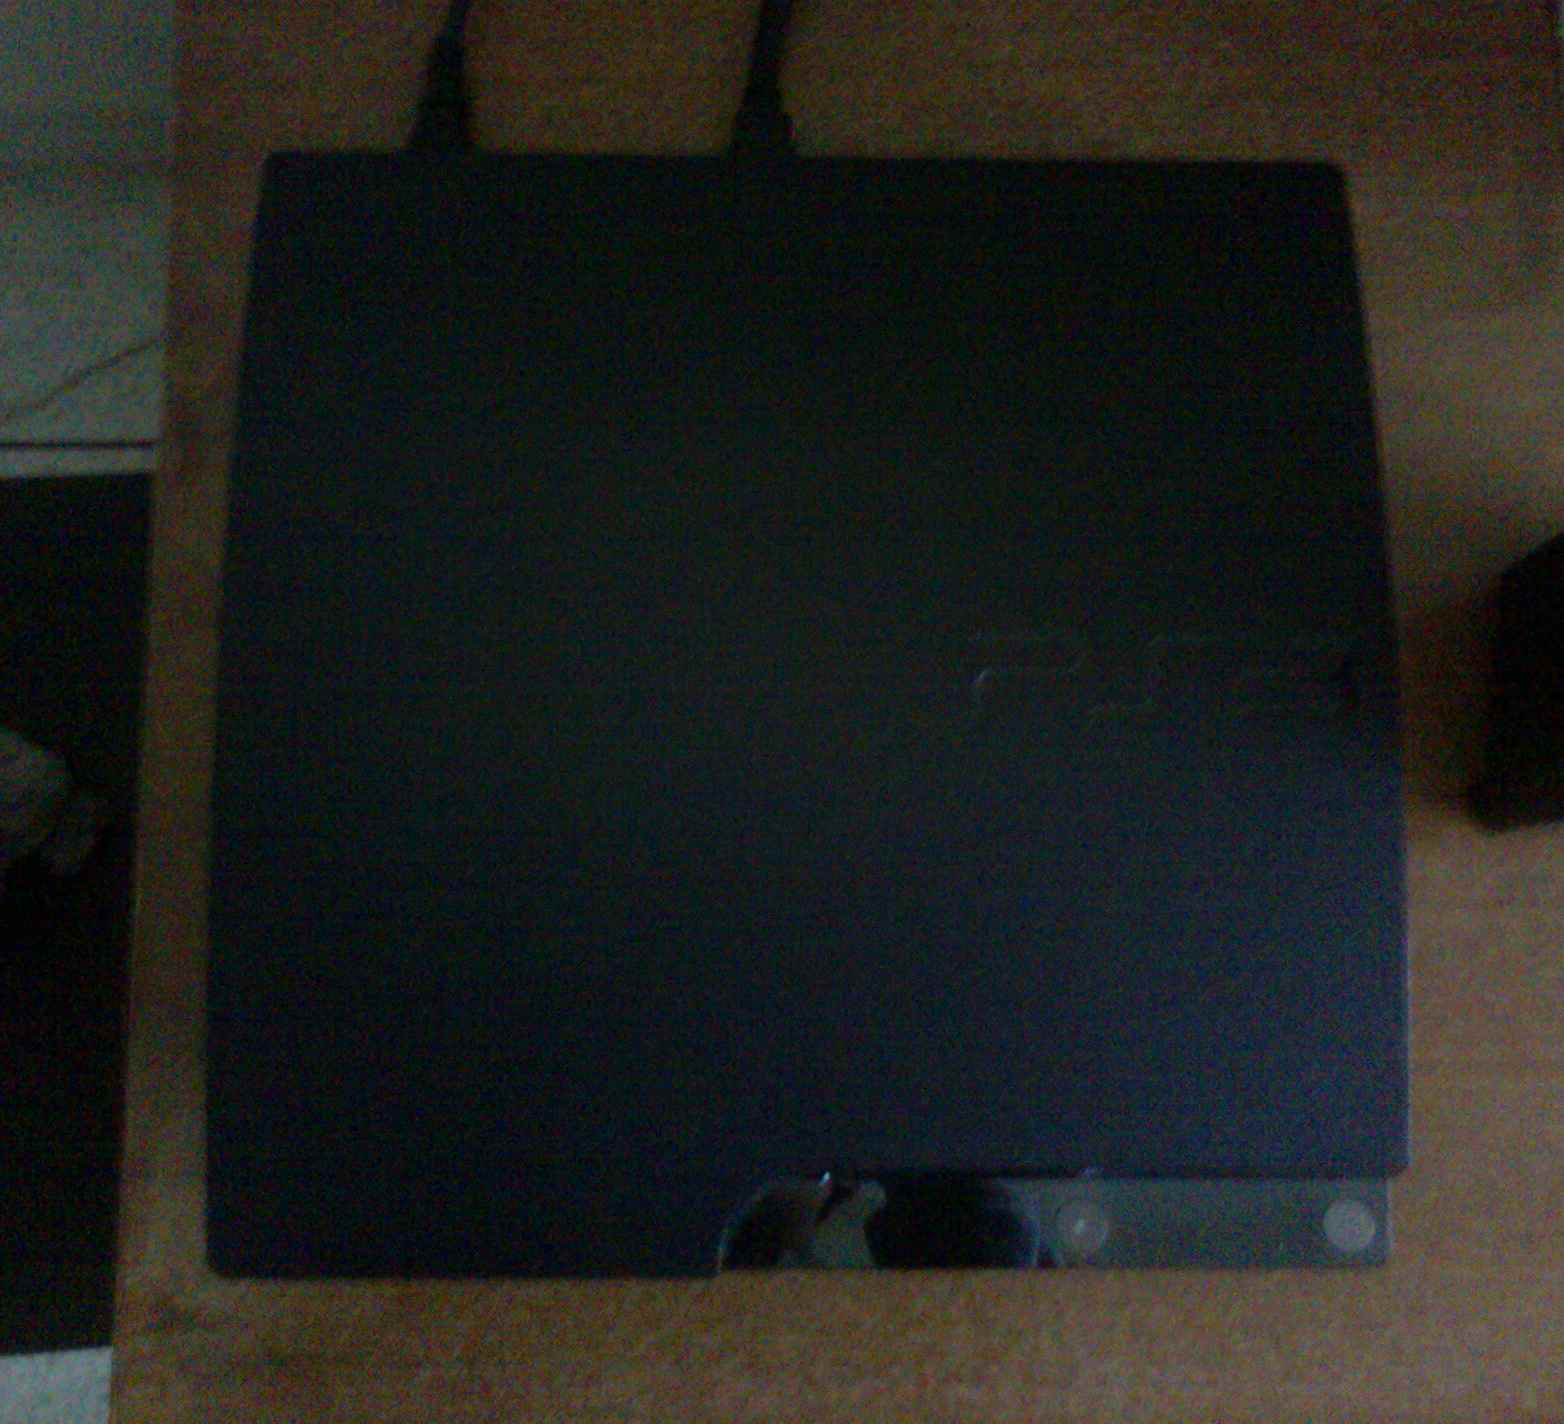 PS3 Slim 120GB large image 0